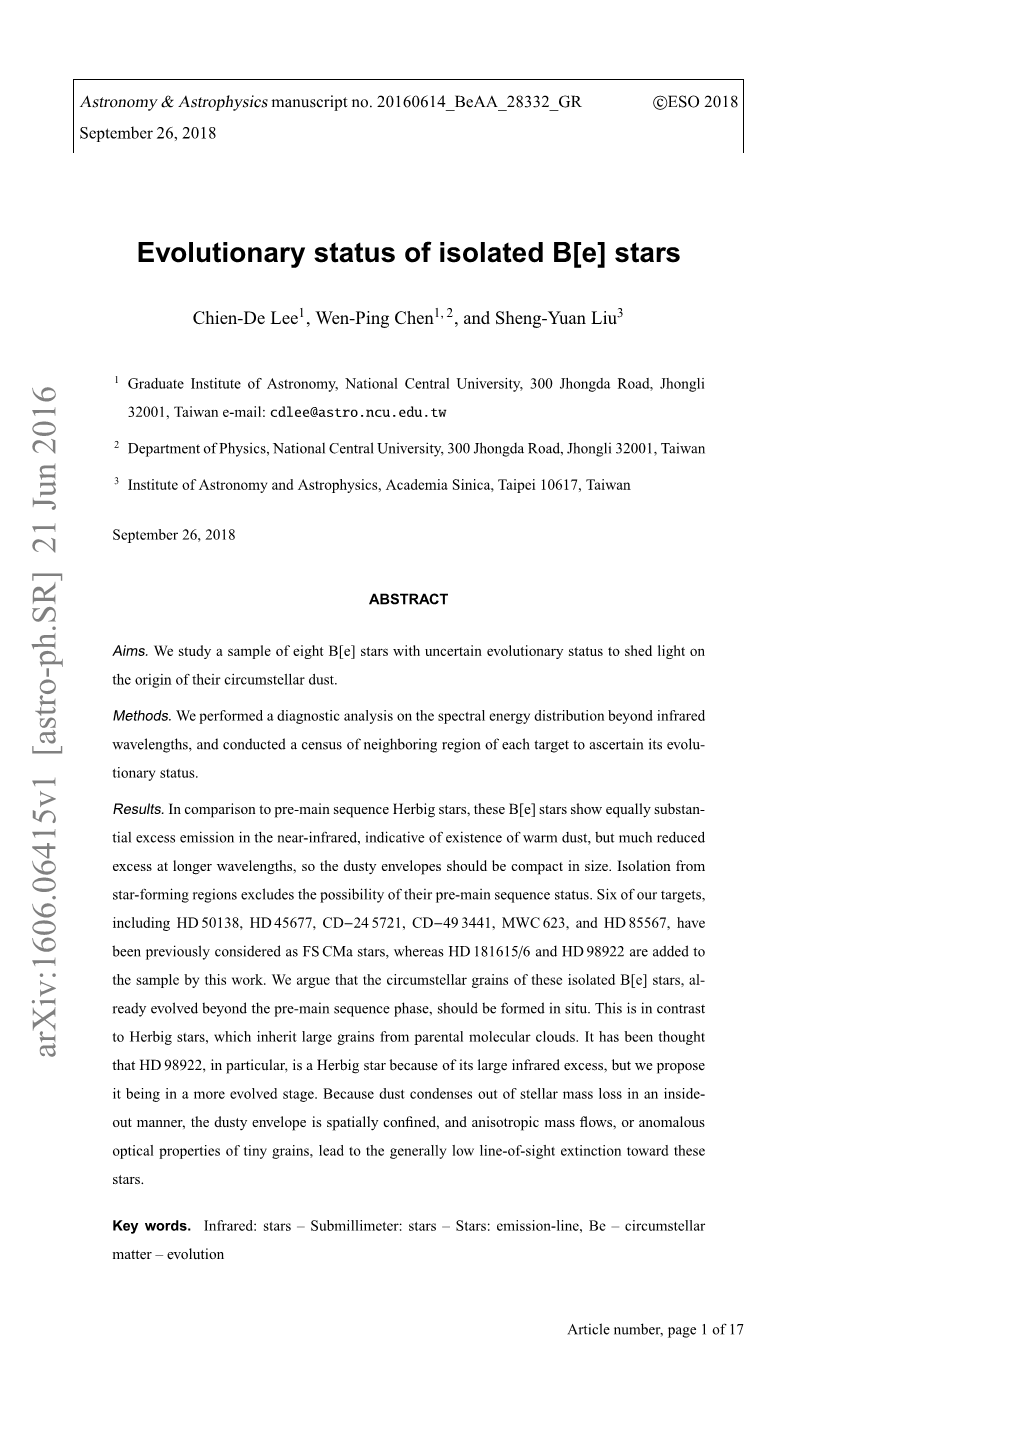 Evolutionary Status of Isolated B [E] Stars